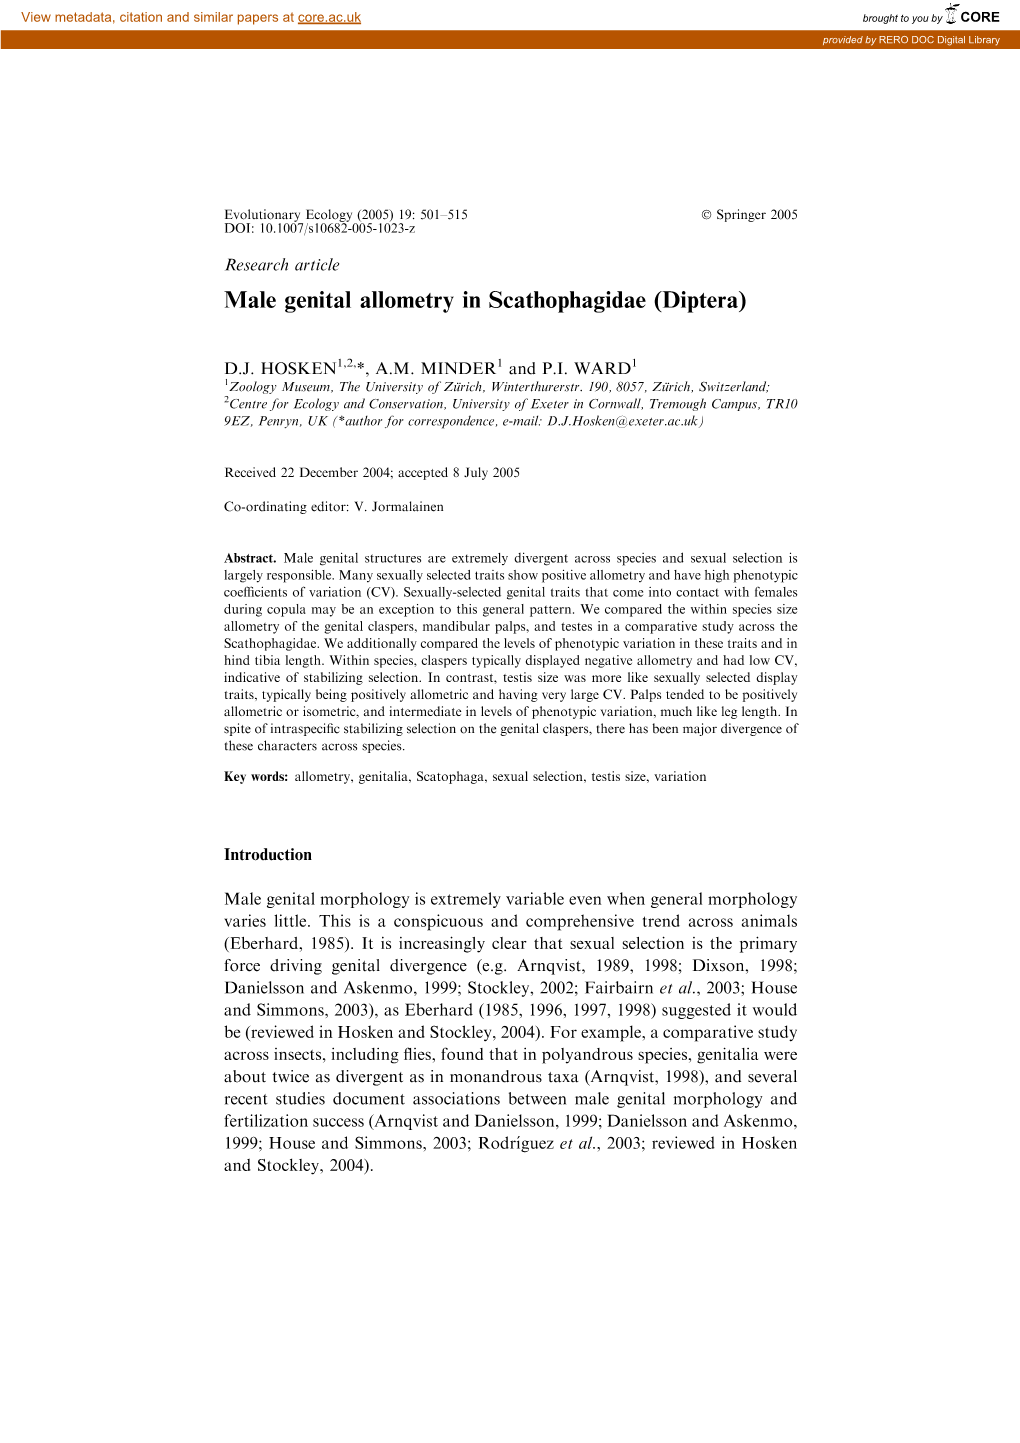 Male Genital Allometry in Scathophagidae (Diptera)